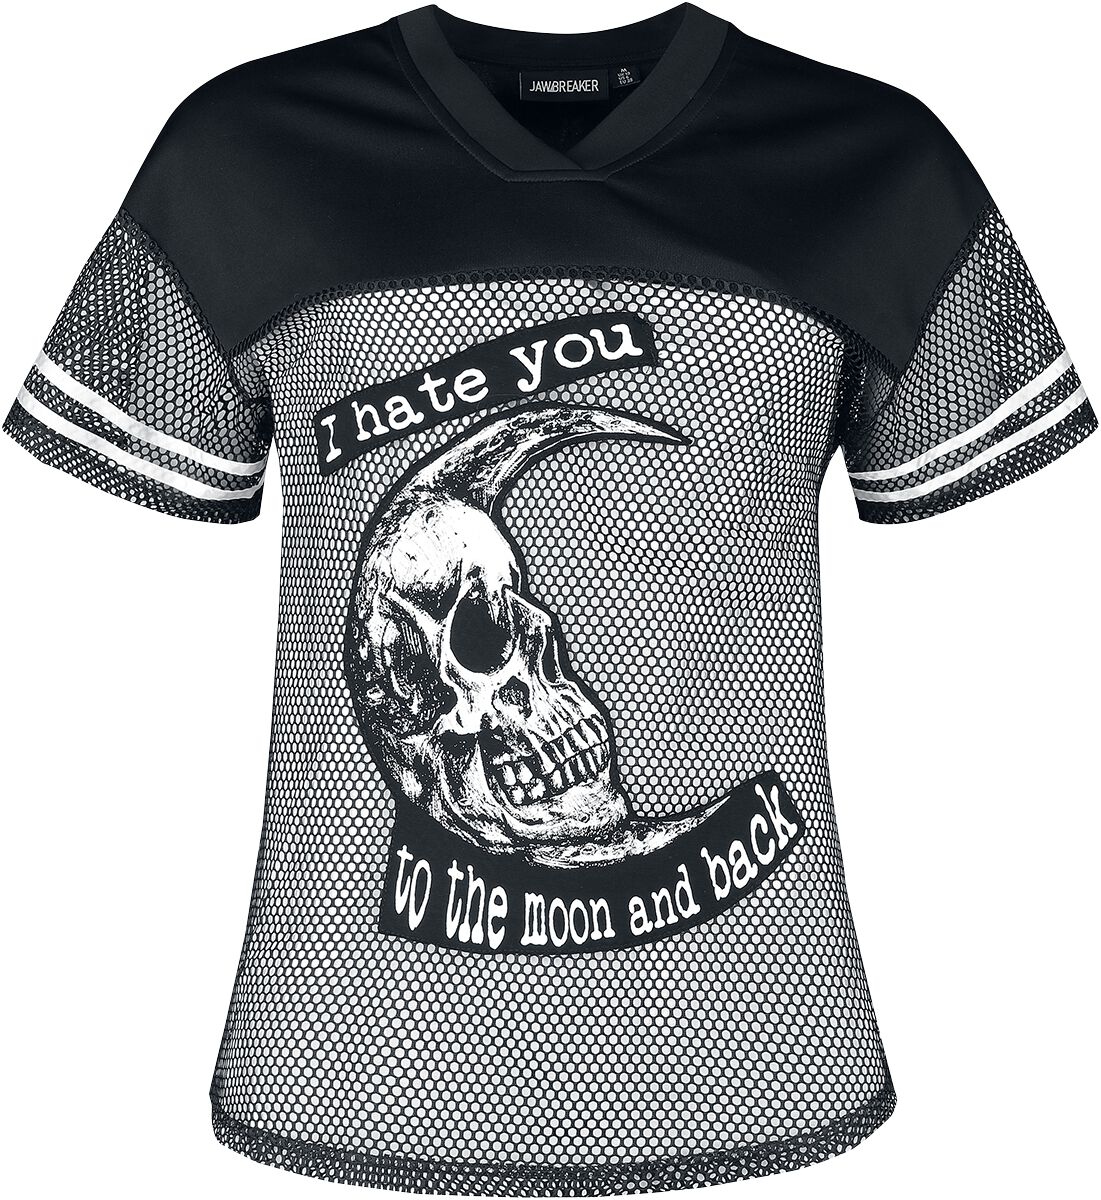 T-Shirt Manches courtes Gothic de Jawbreaker - To The Moon And Back Tee - XS à XXL - pour Femme - no